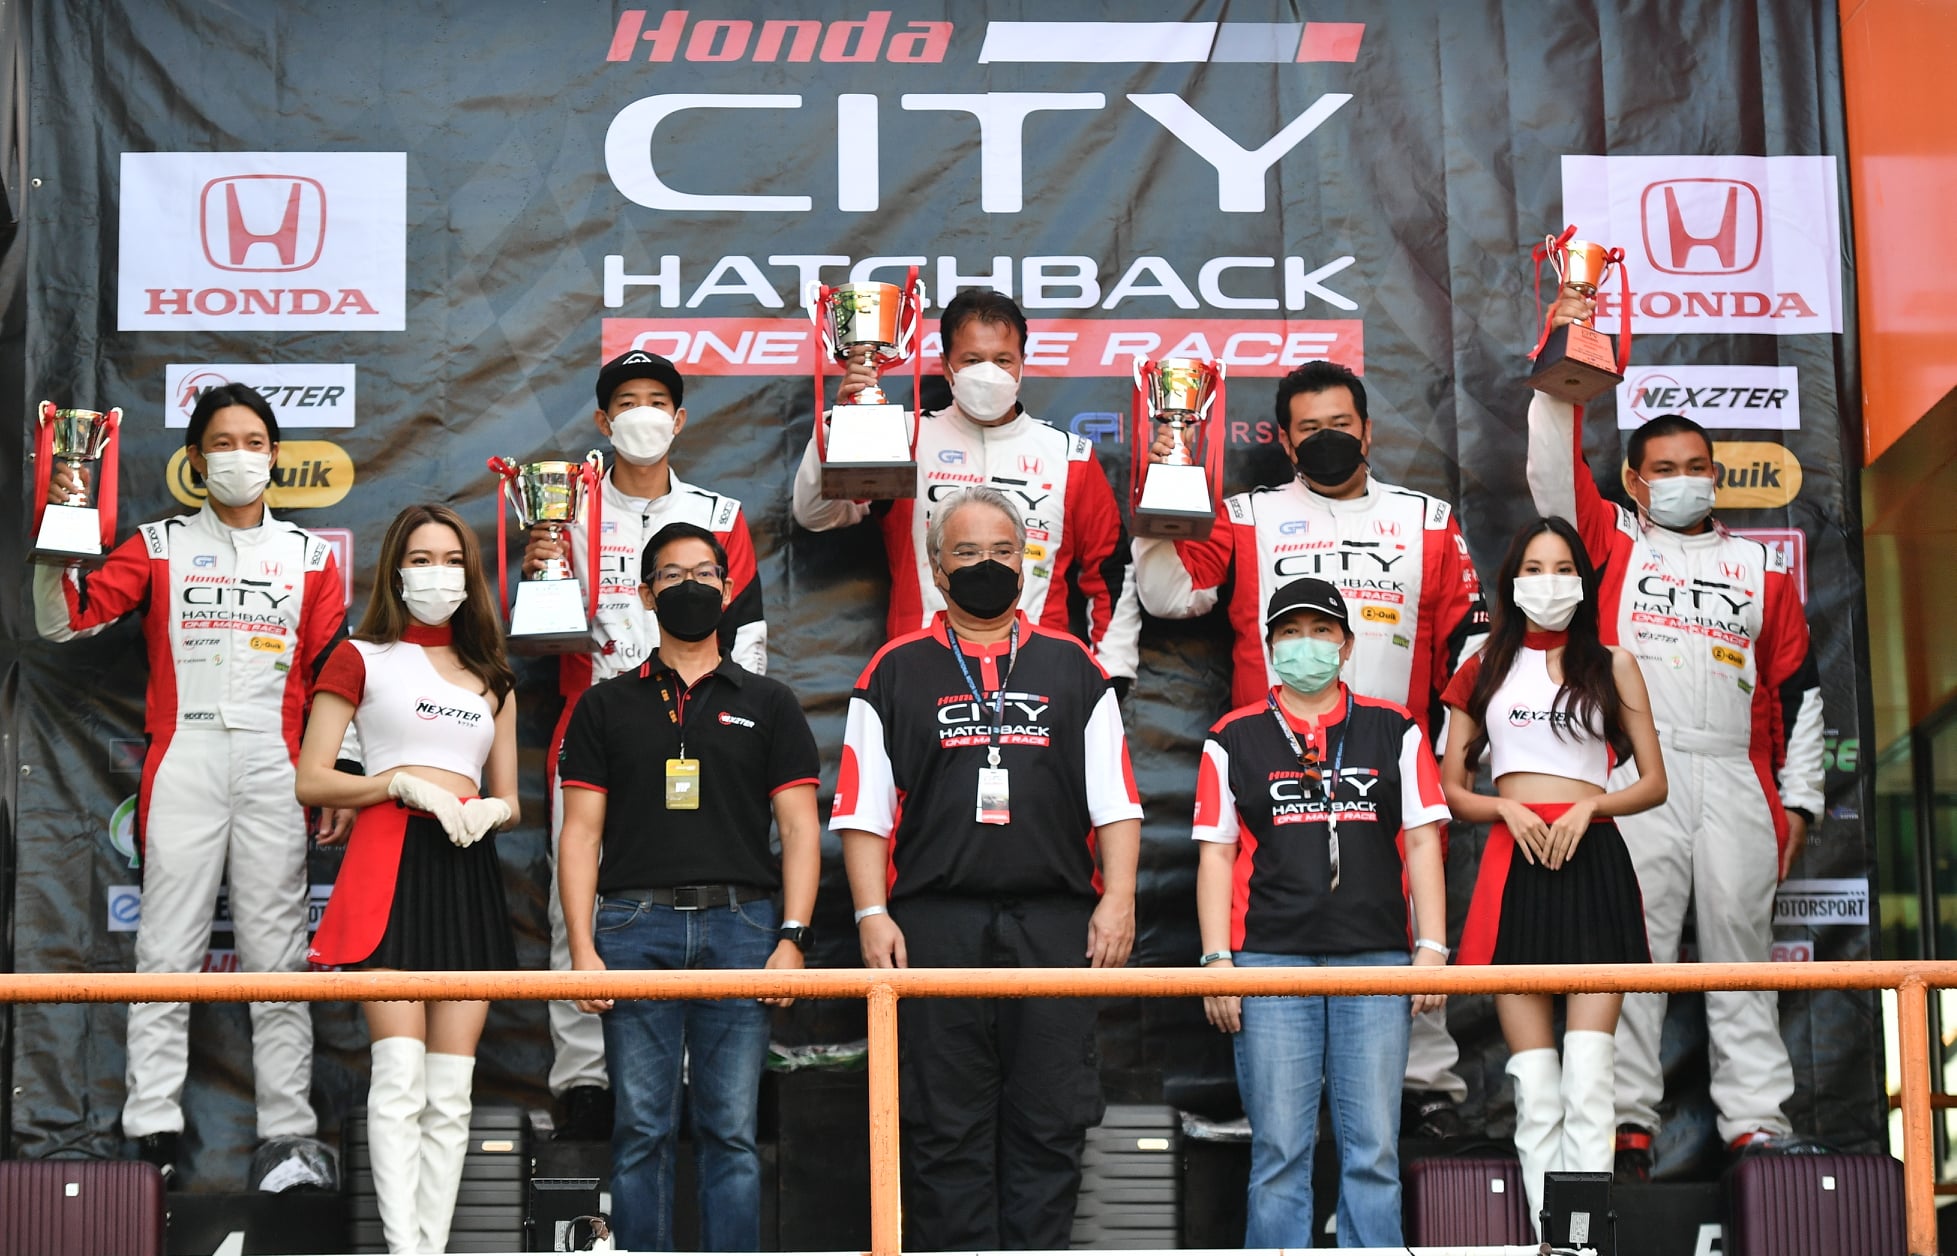 Honda City Hatchback One Make Race 2021 - 01